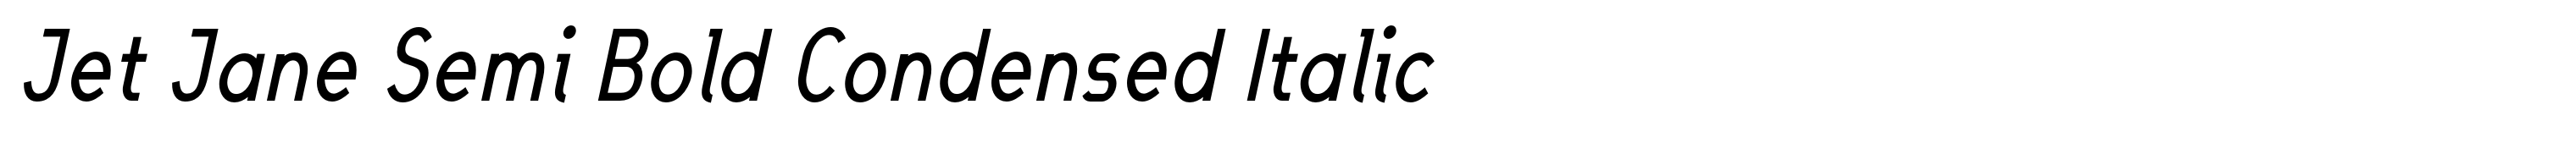 Jet Jane Semi Bold Condensed Italic